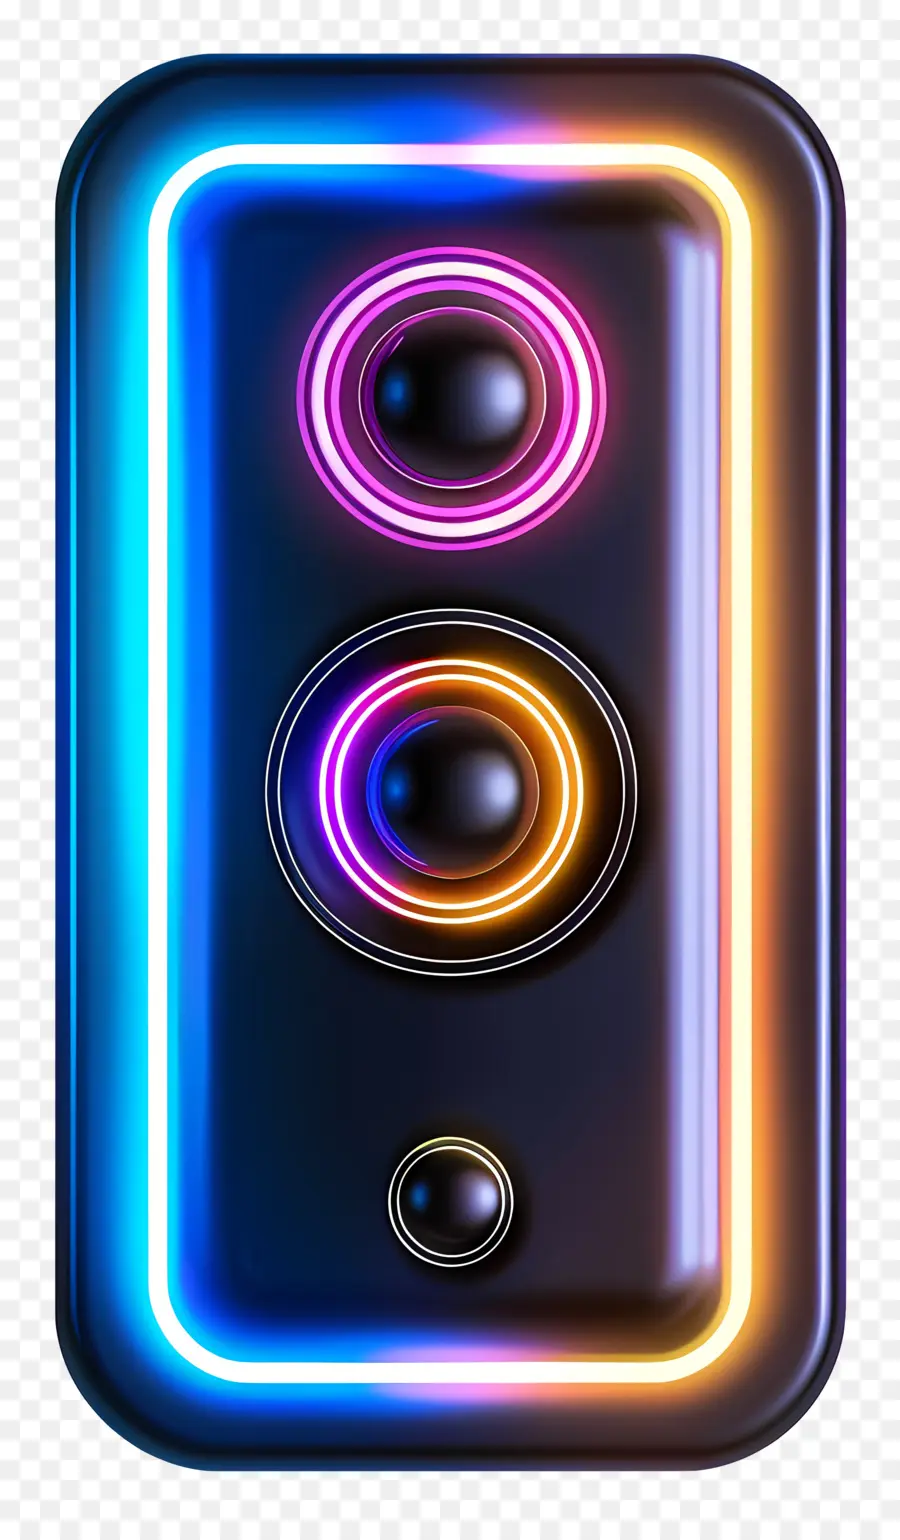 ring doorbell led lights neon lights light display colorful